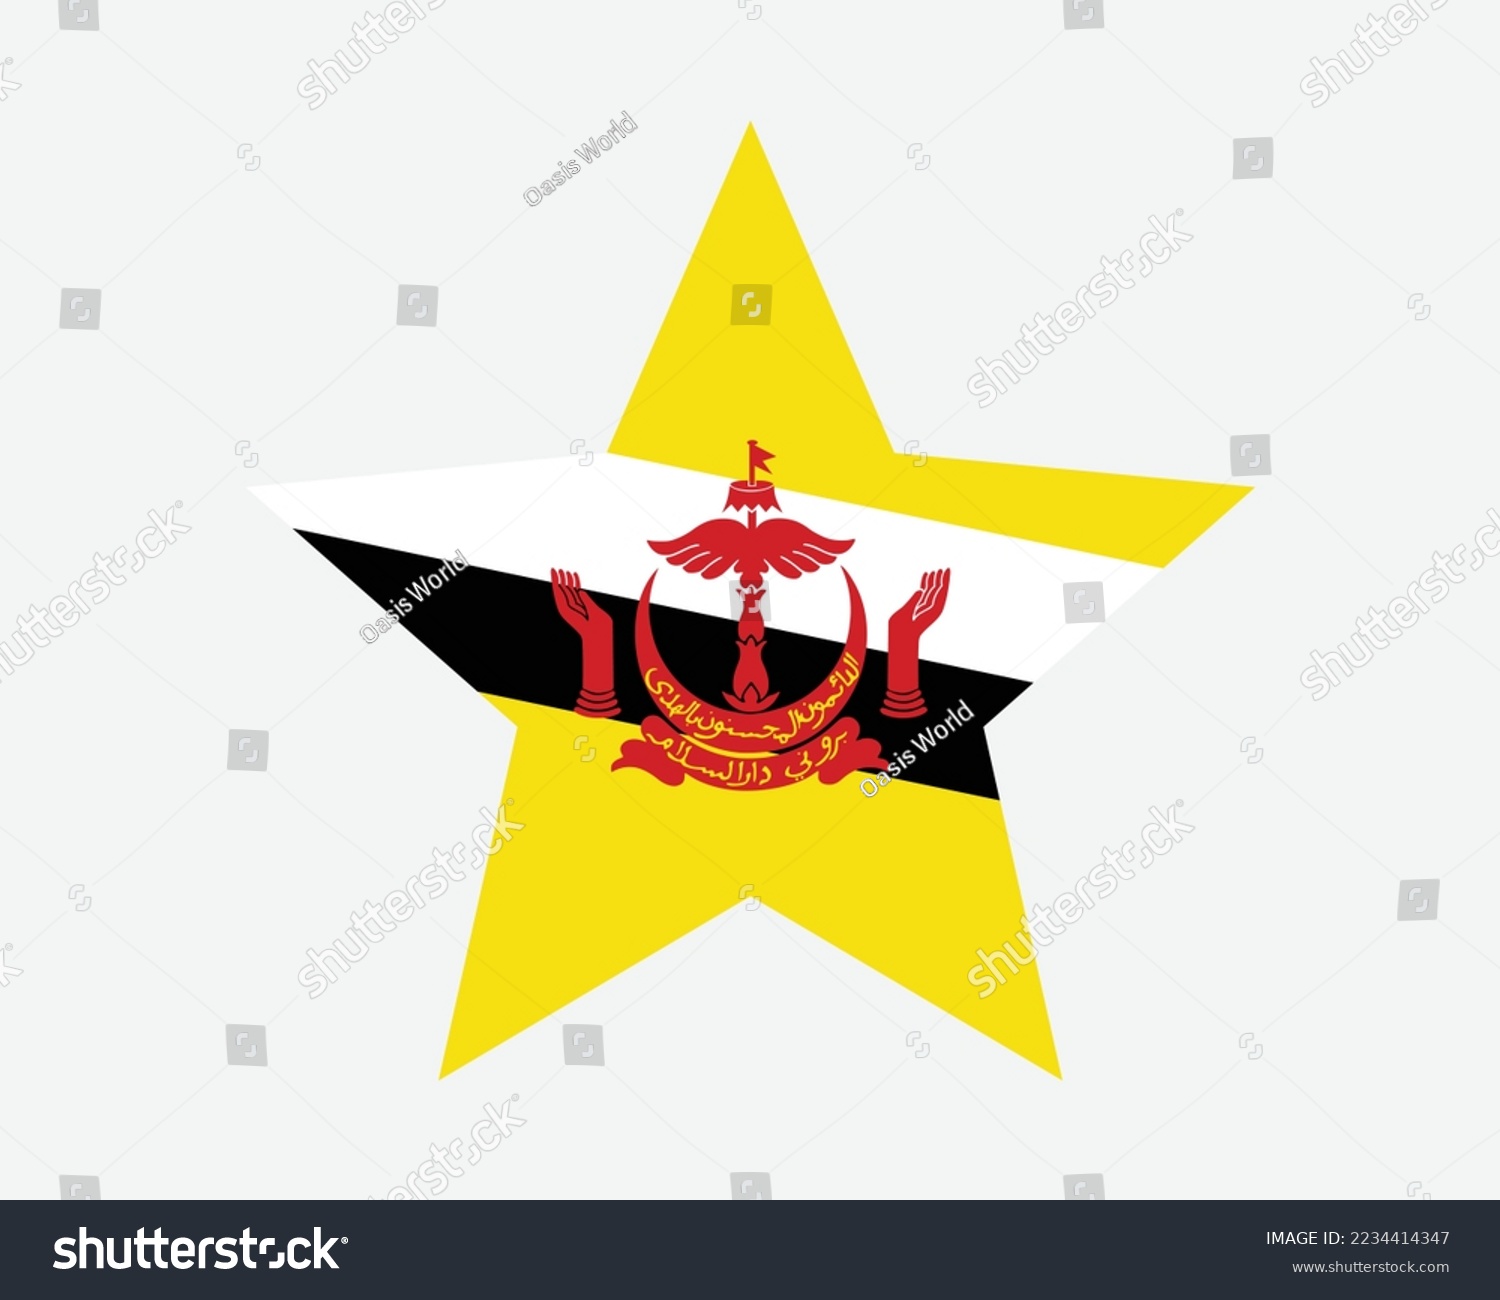 SVG of Brunei Star Flag. Bruneian Star Shape Flag. Brunei Darussalam Country National Banner Icon Symbol Vector 2D Flat Artwork Graphic Illustration svg